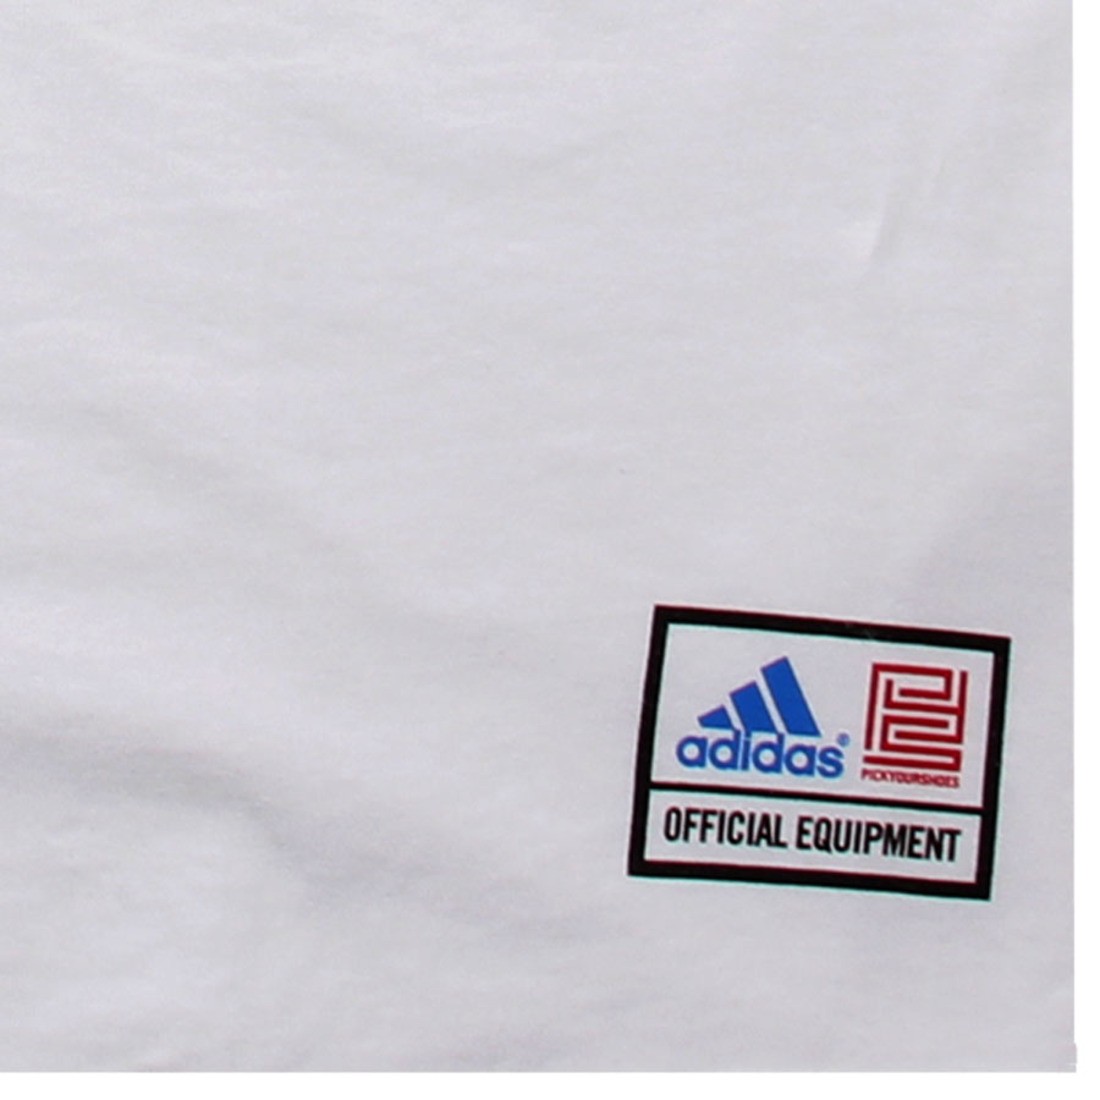 Adidas Adi PYS Tee Run DMC style (white) shirt